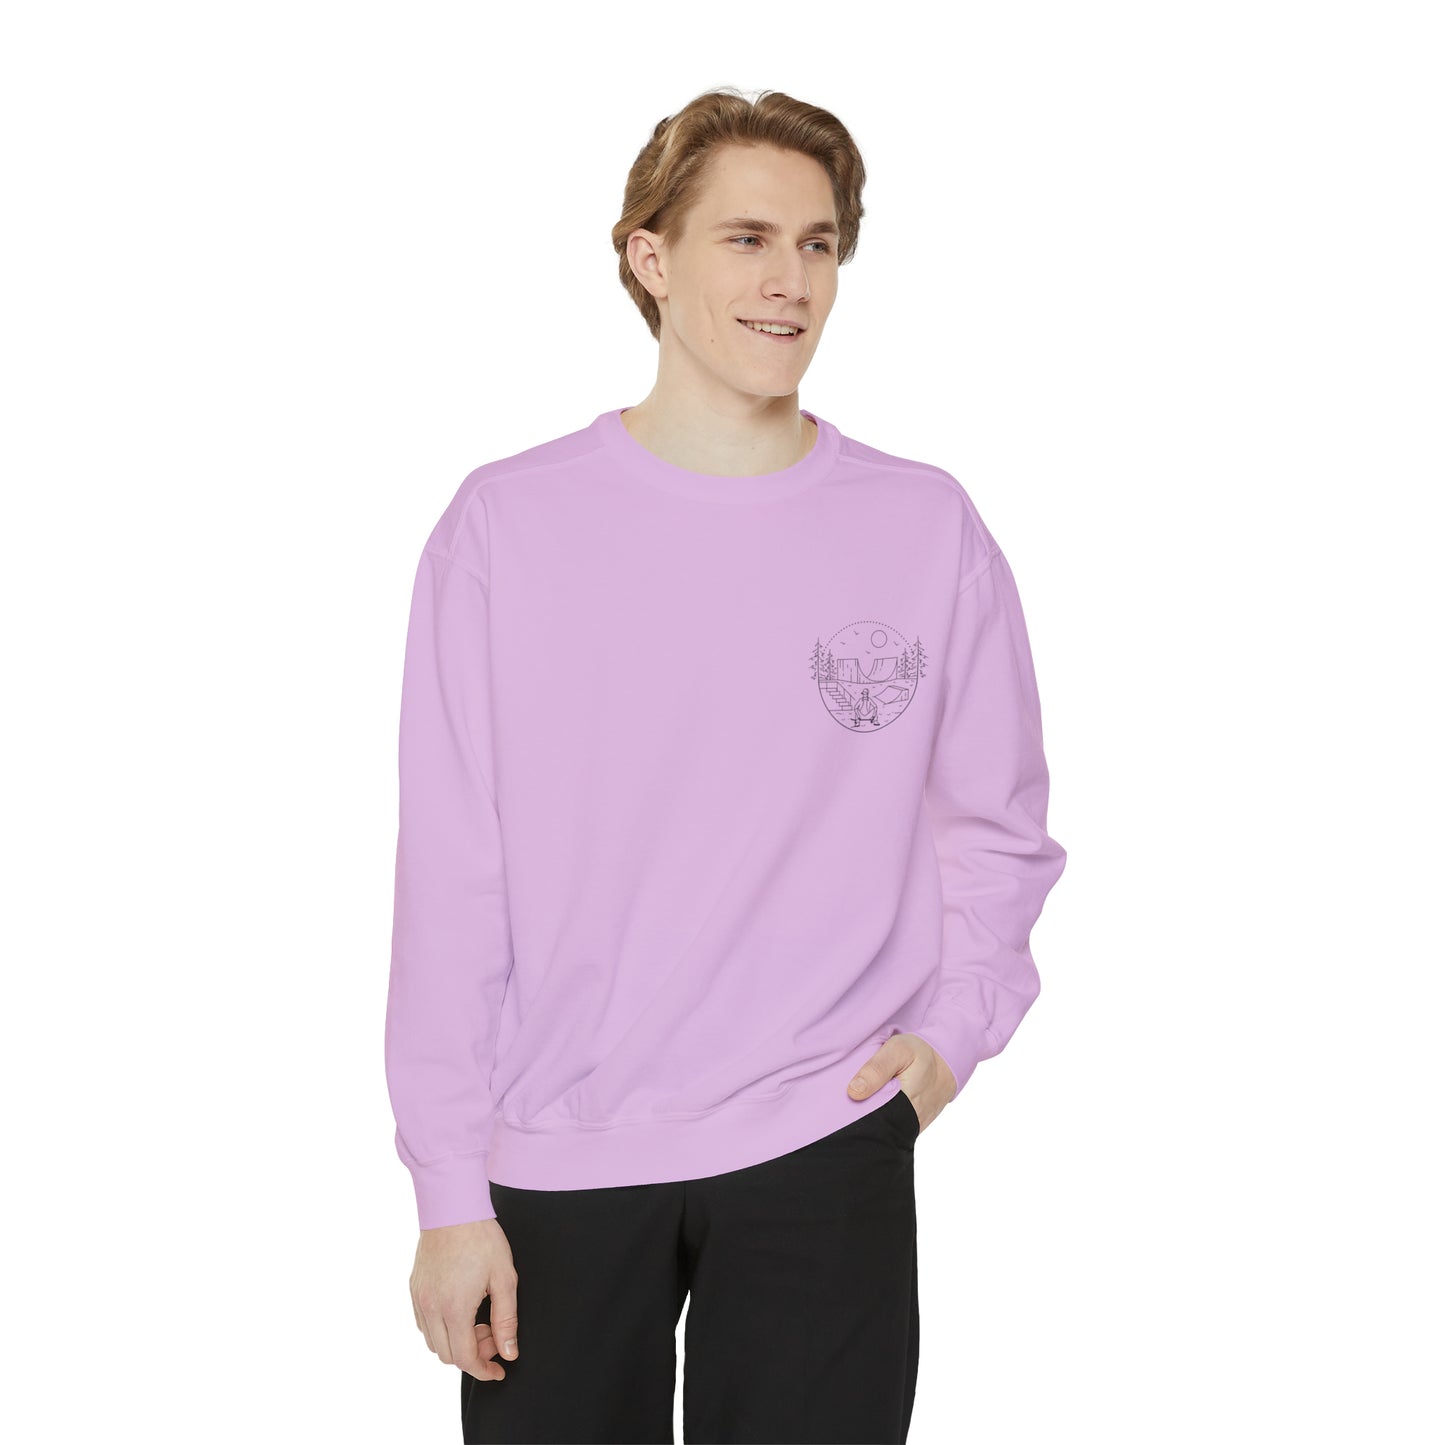 Skater 2 - blk - Unisex Garment-Dyed Sweatshirt